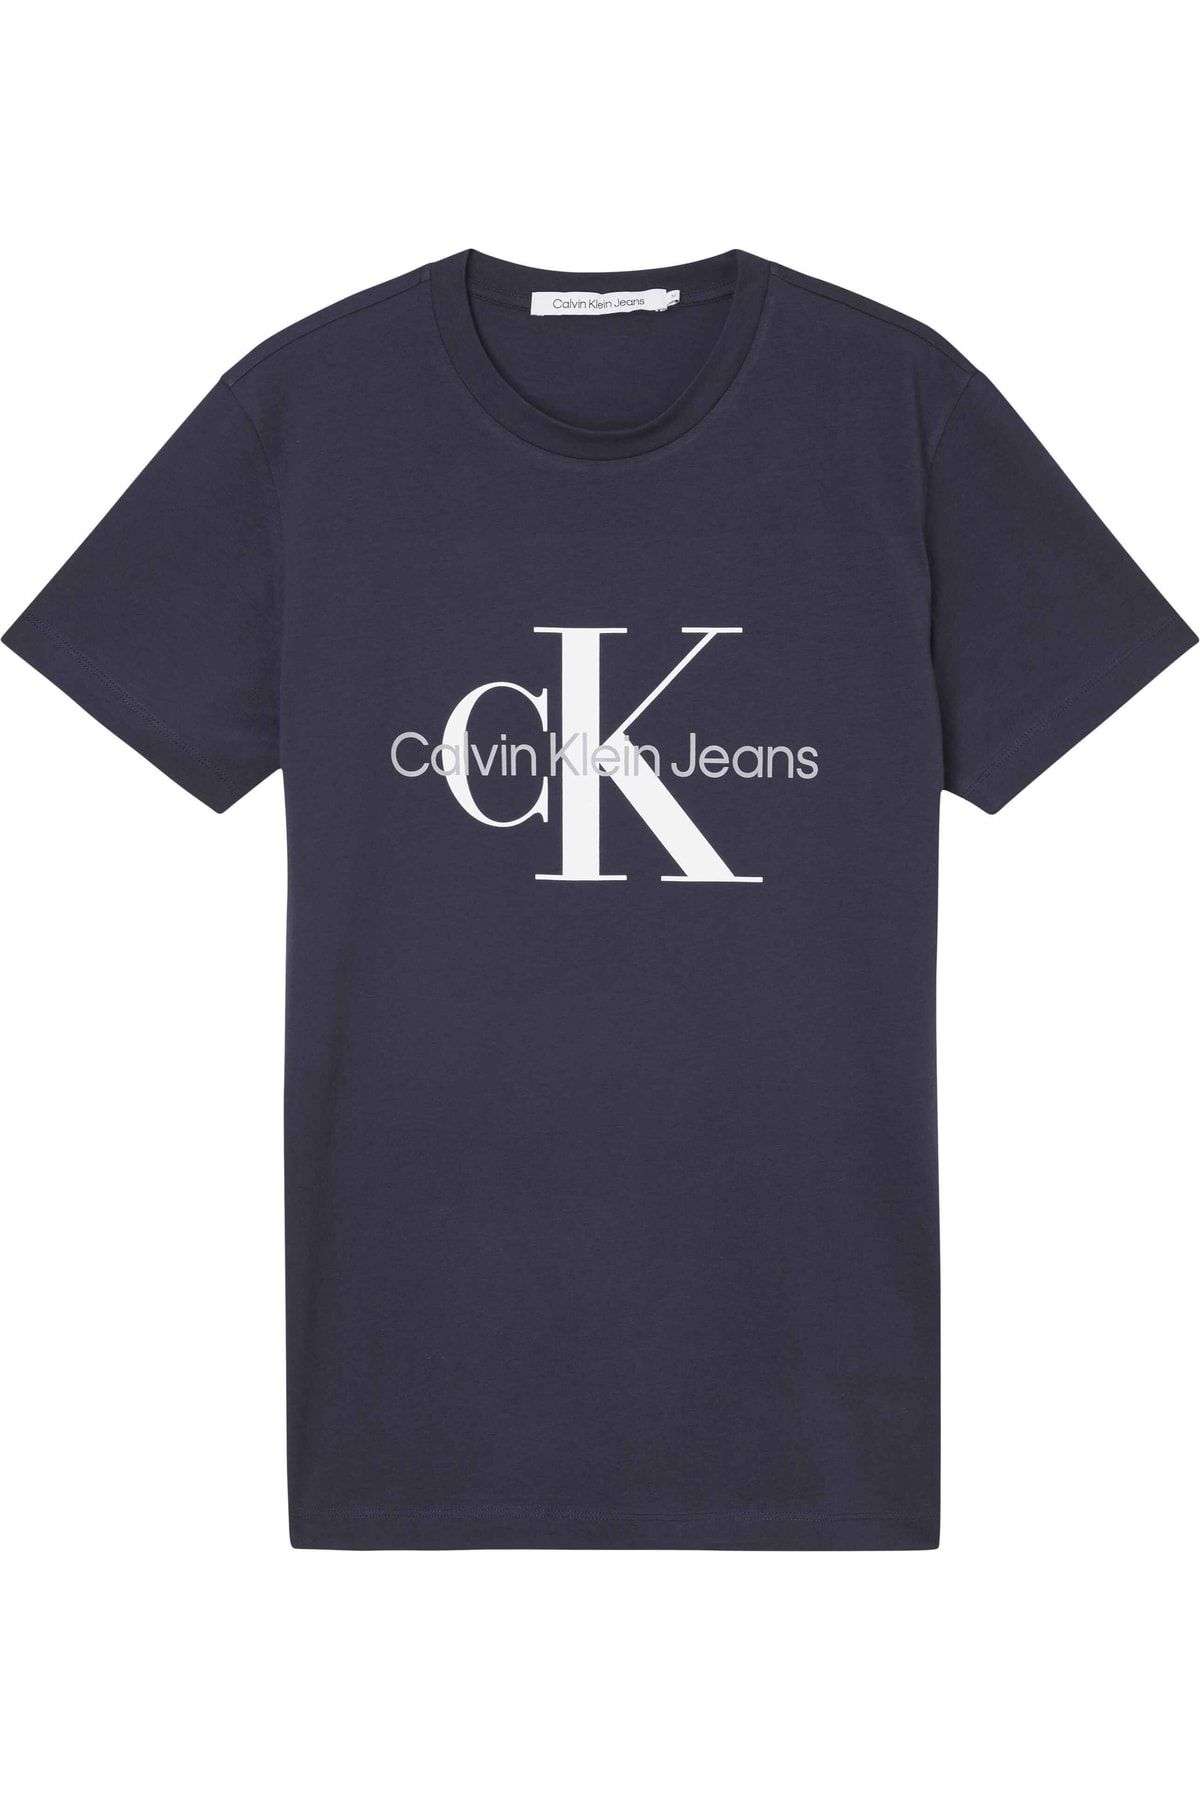 Shirt Slim Fit Klein Trendyol J30j320935 Shirt Cotton T Neck Chw Crew - T Men\'s Calvin